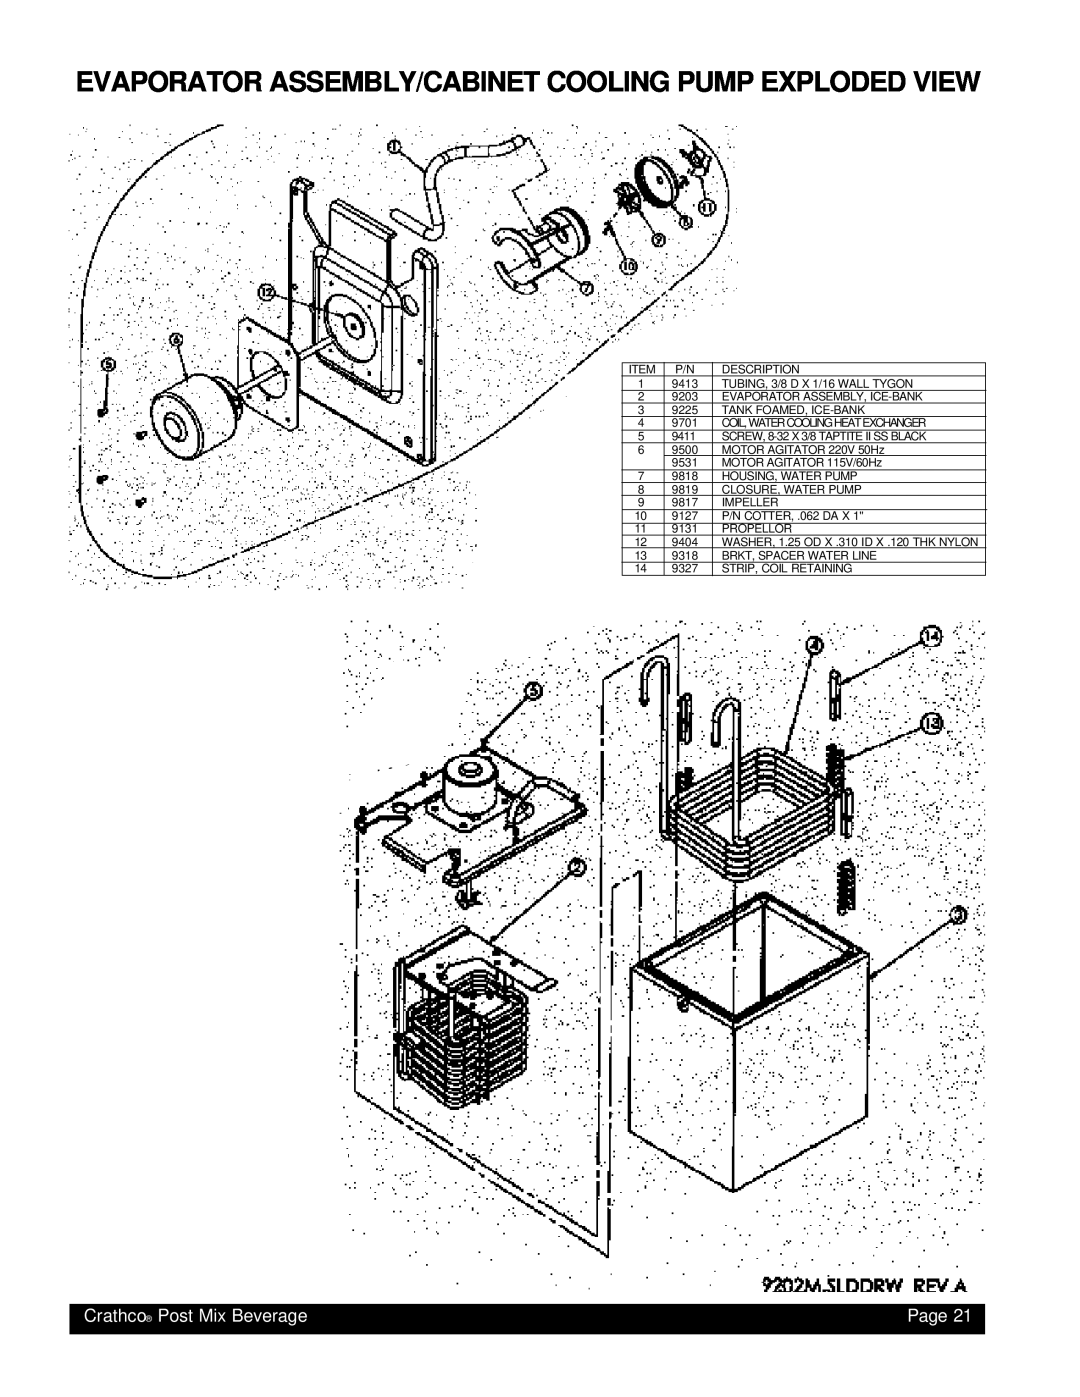 Grindmaster PM45-B, PM4-B instruction manual Crathco Post Mix Beverage, Page 